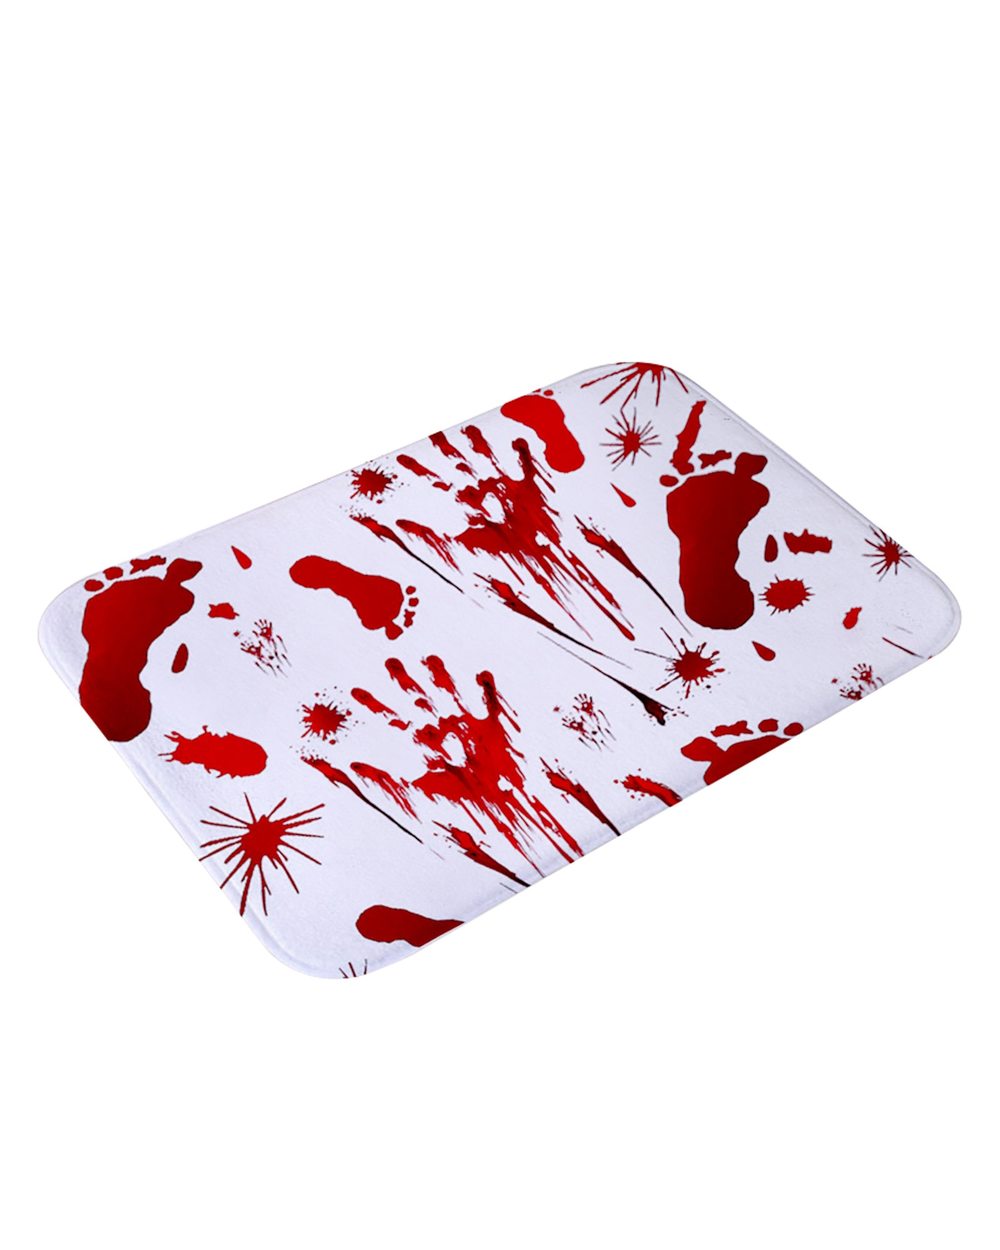 Six™ Bloody Bath Mat